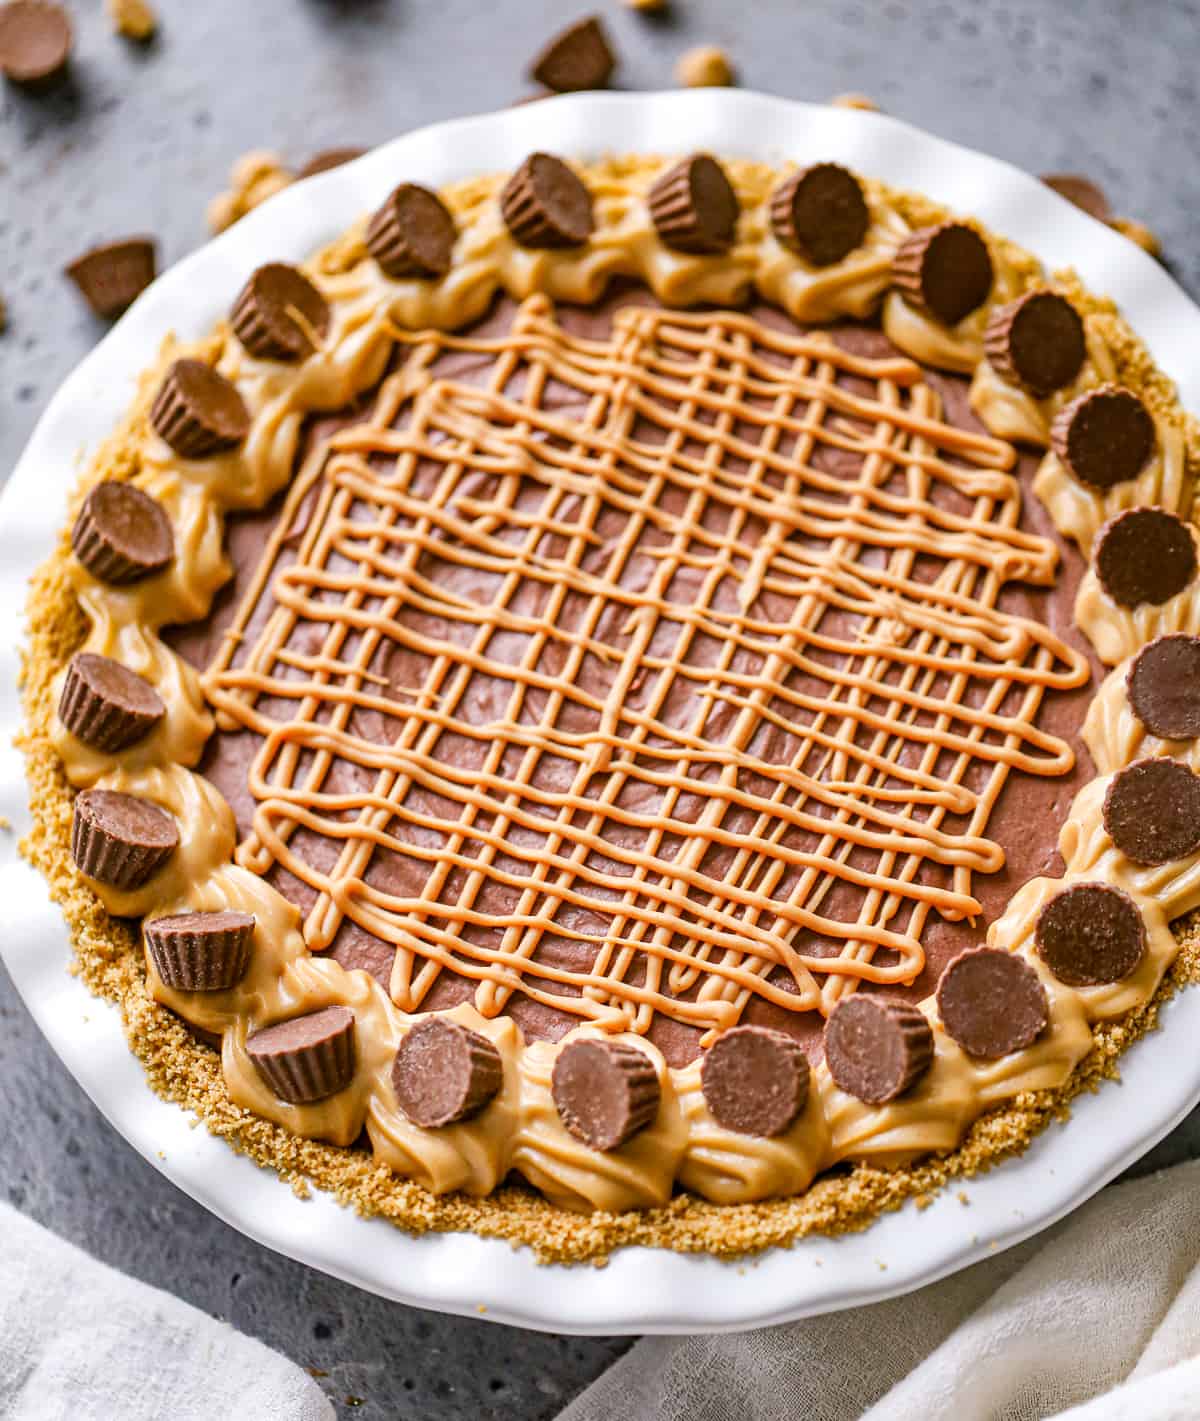 Costco Peanut Butter Chocolate Pie Recipe